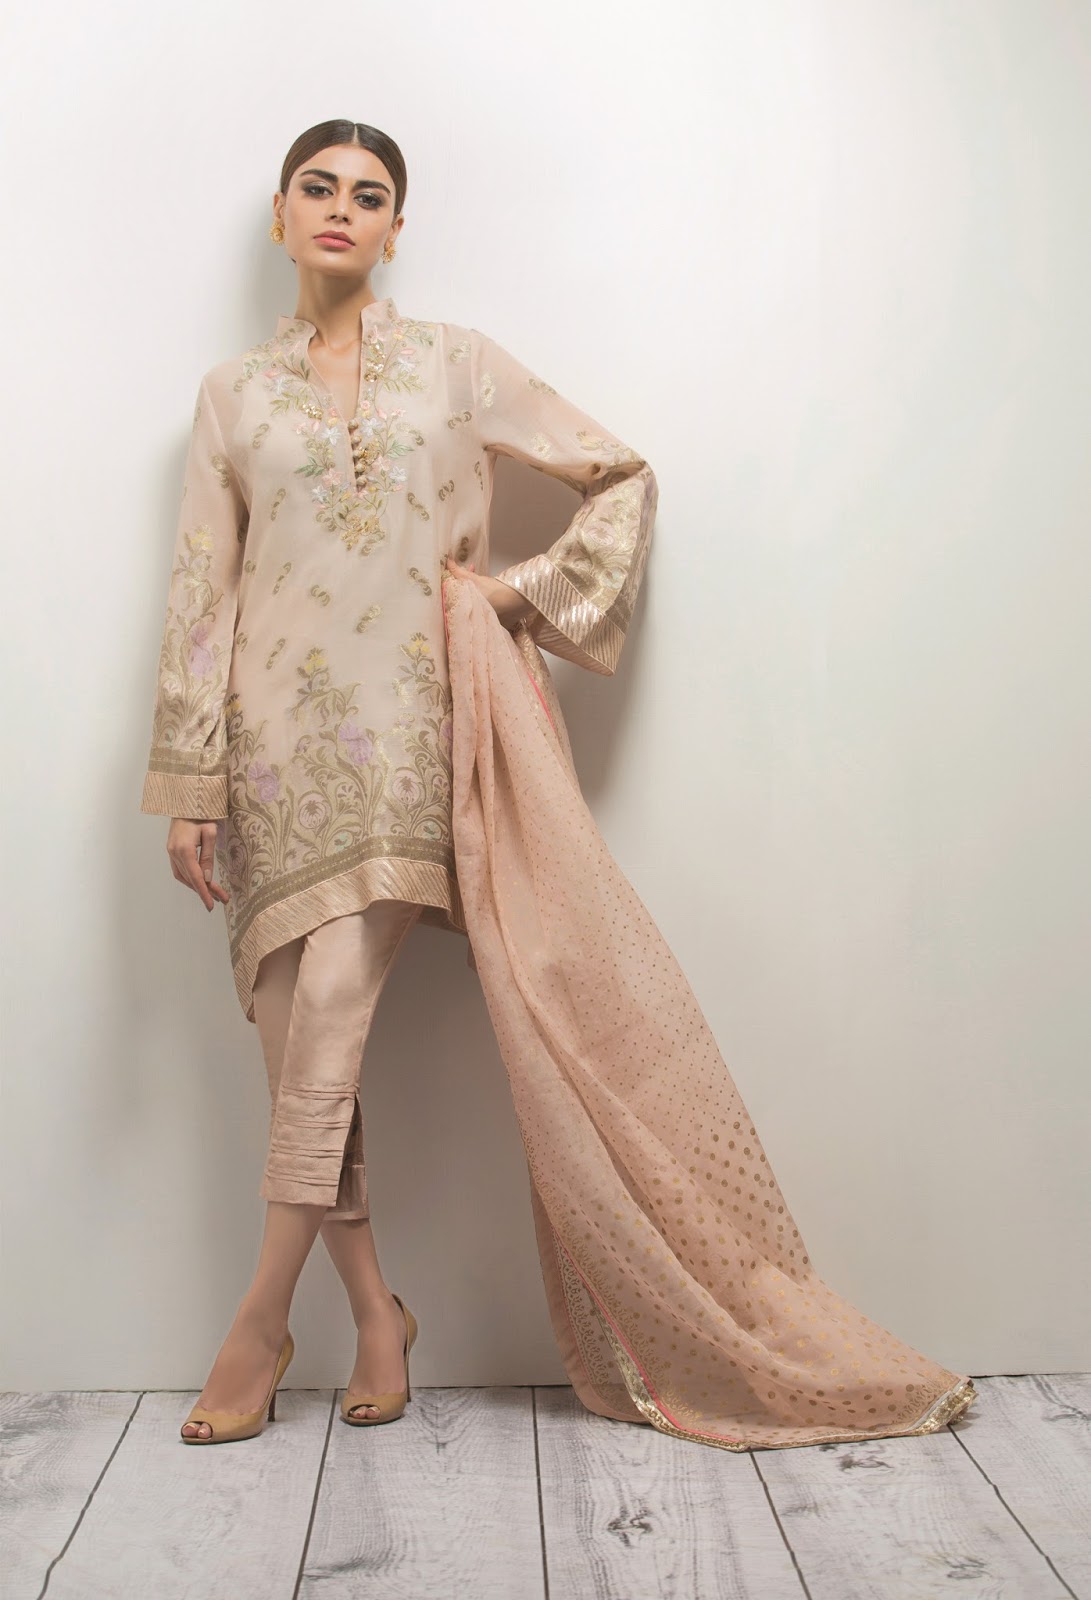 Pakistani Model/Actress Sadaf Kanwal Looks Stunning in Her Latest Photoshoot.